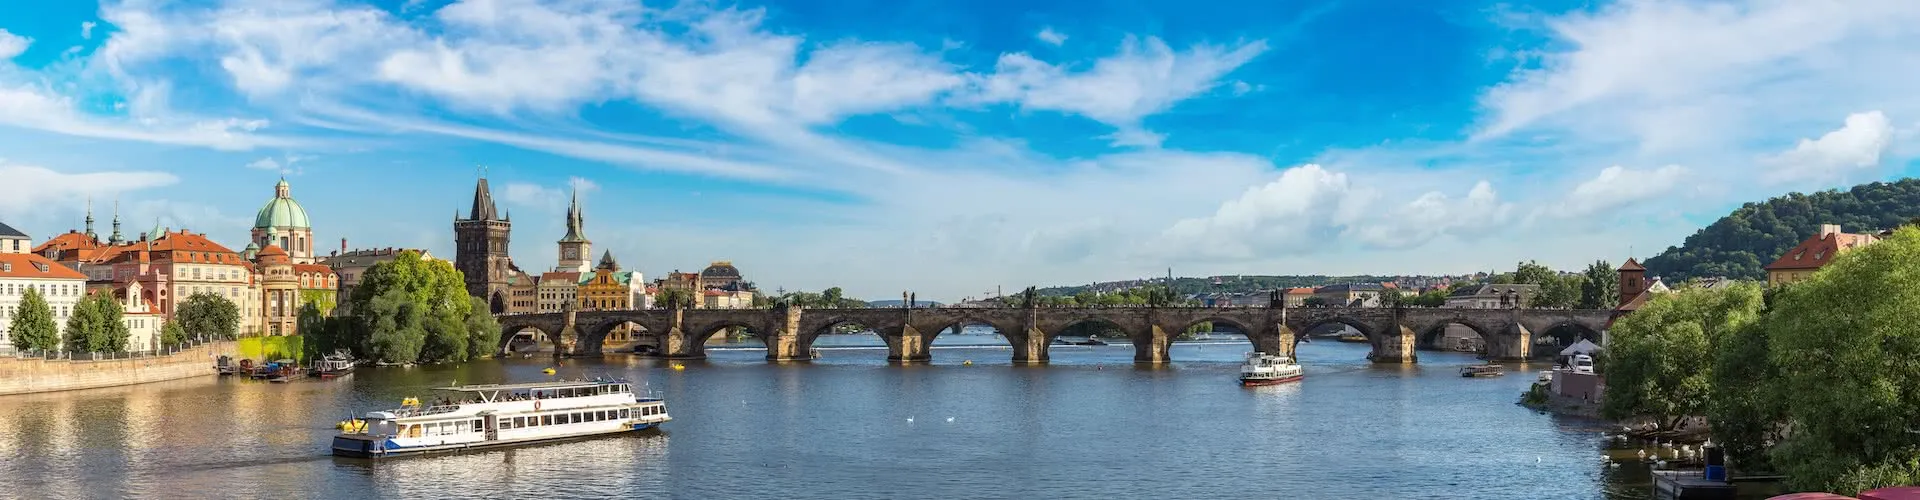 Prague panorama image